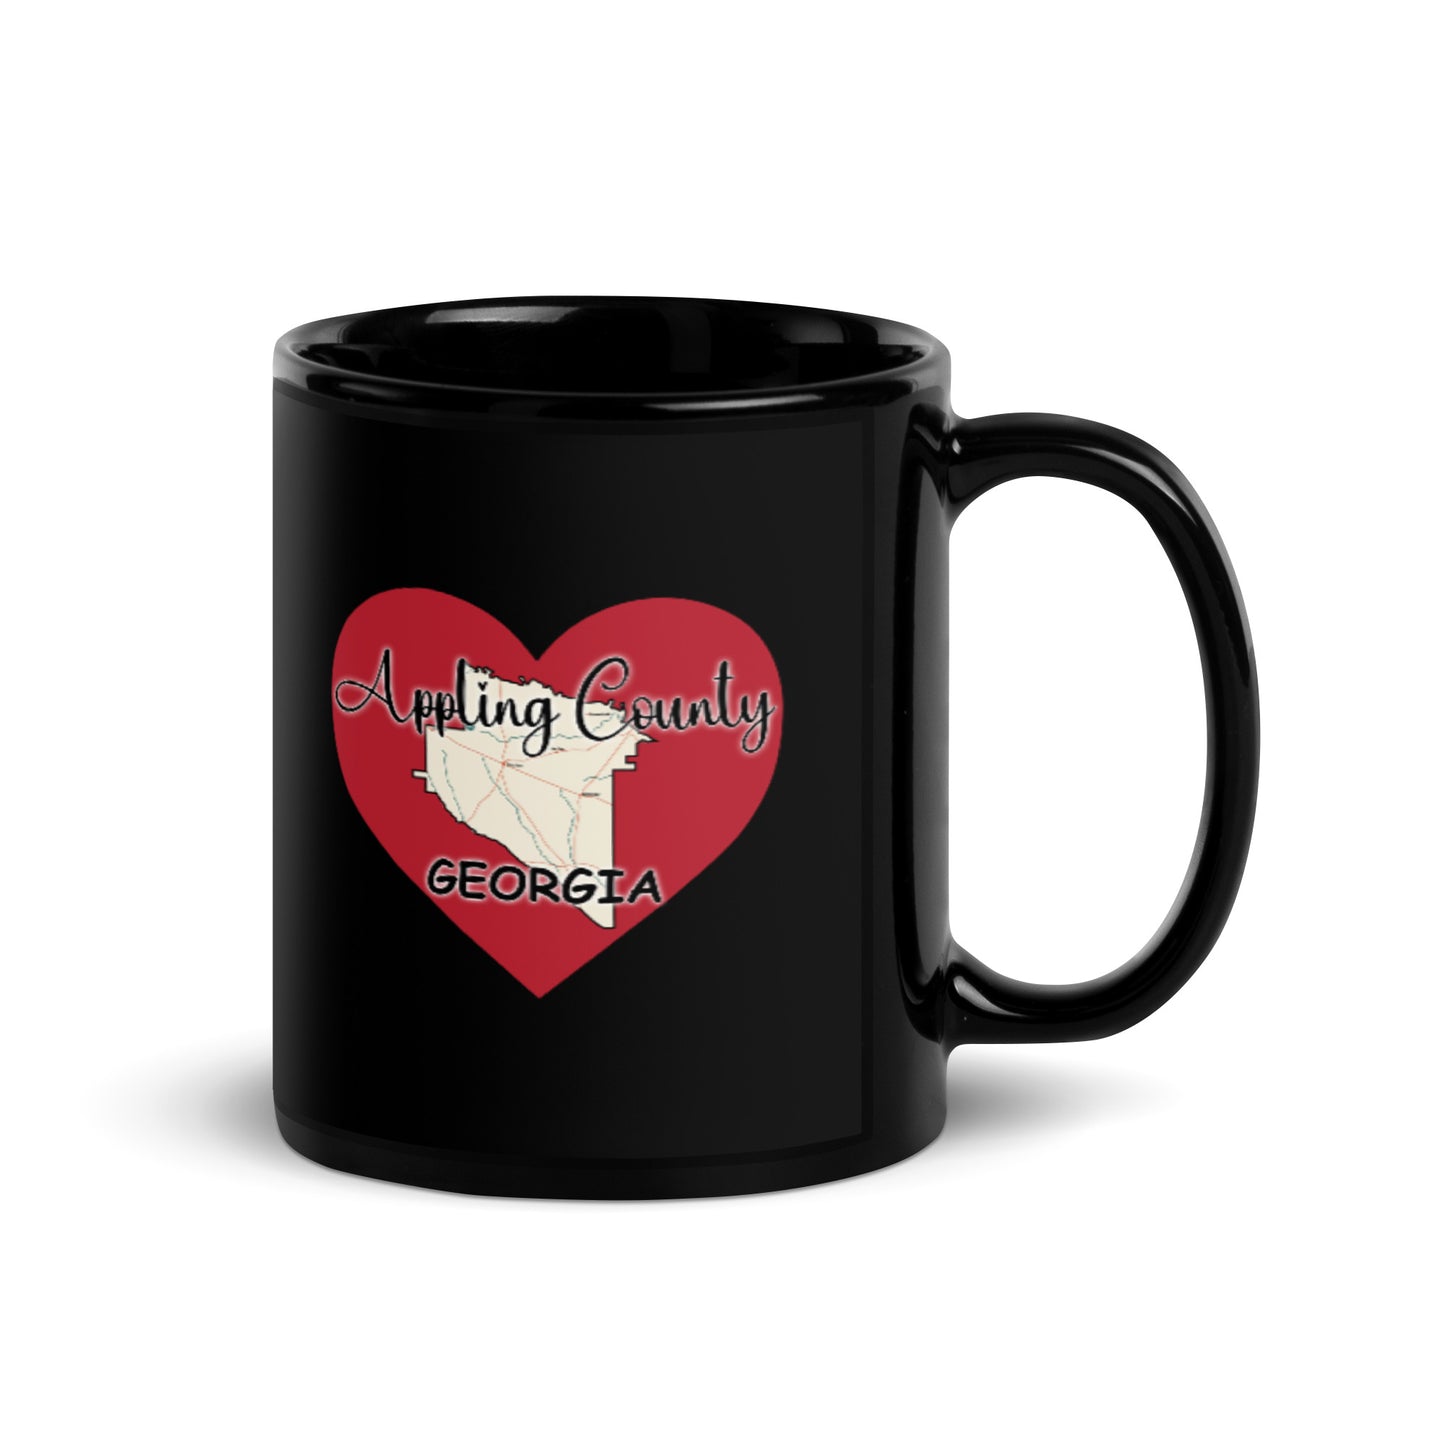 Appling County Map on Heart Black Glossy Ceramic Coffee Mug